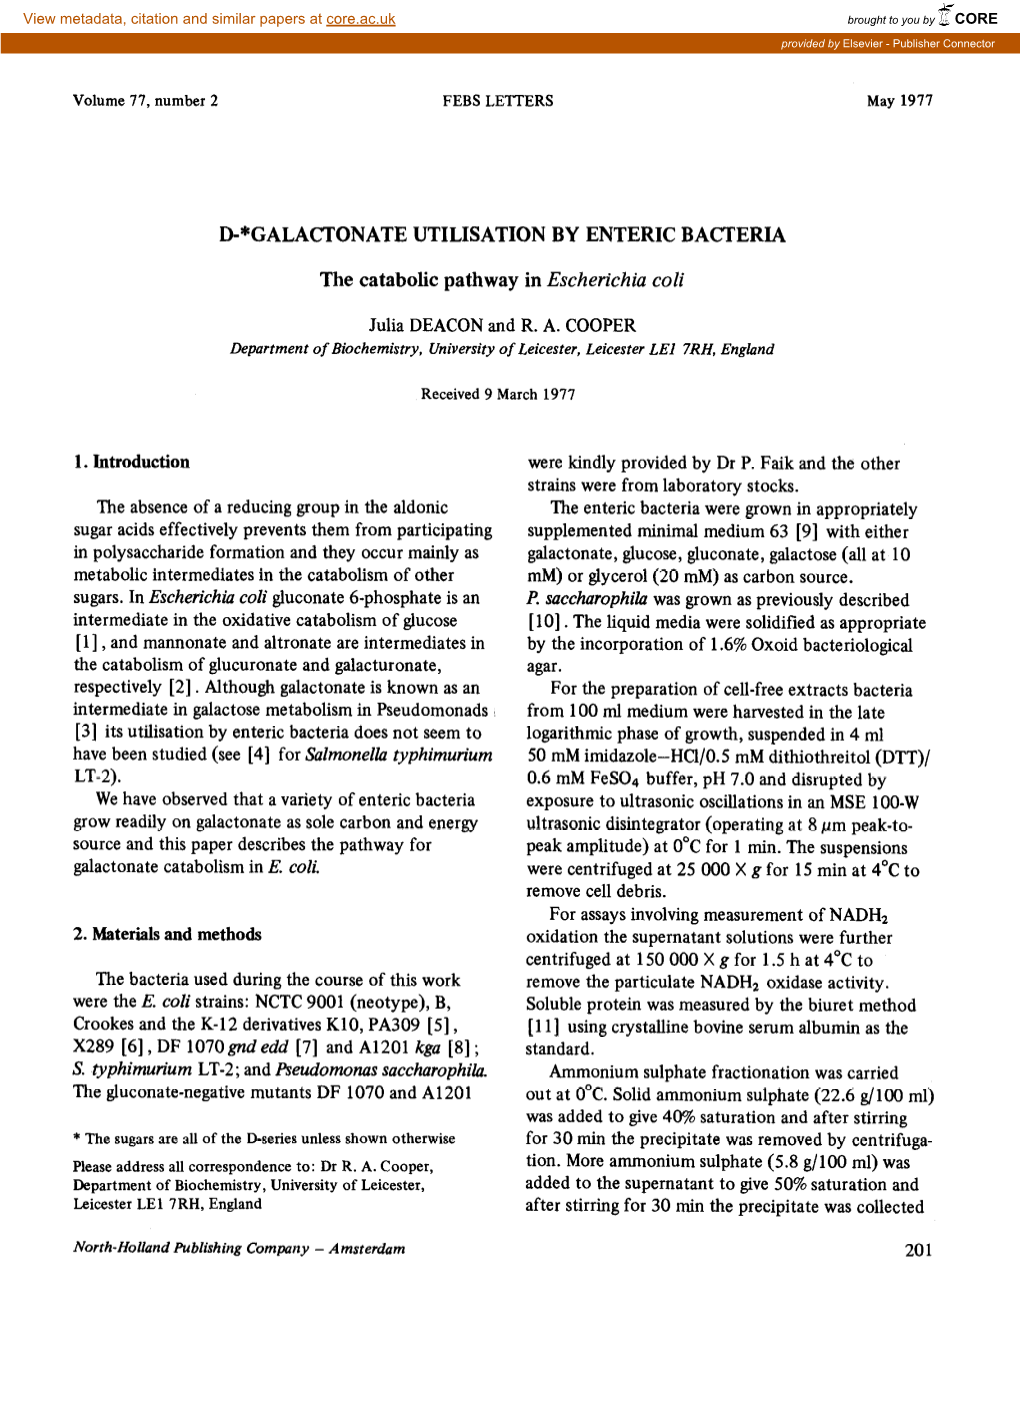 D-“GALACTONATE UTILISATION by ENTERIC BACTERIA the Catabolic